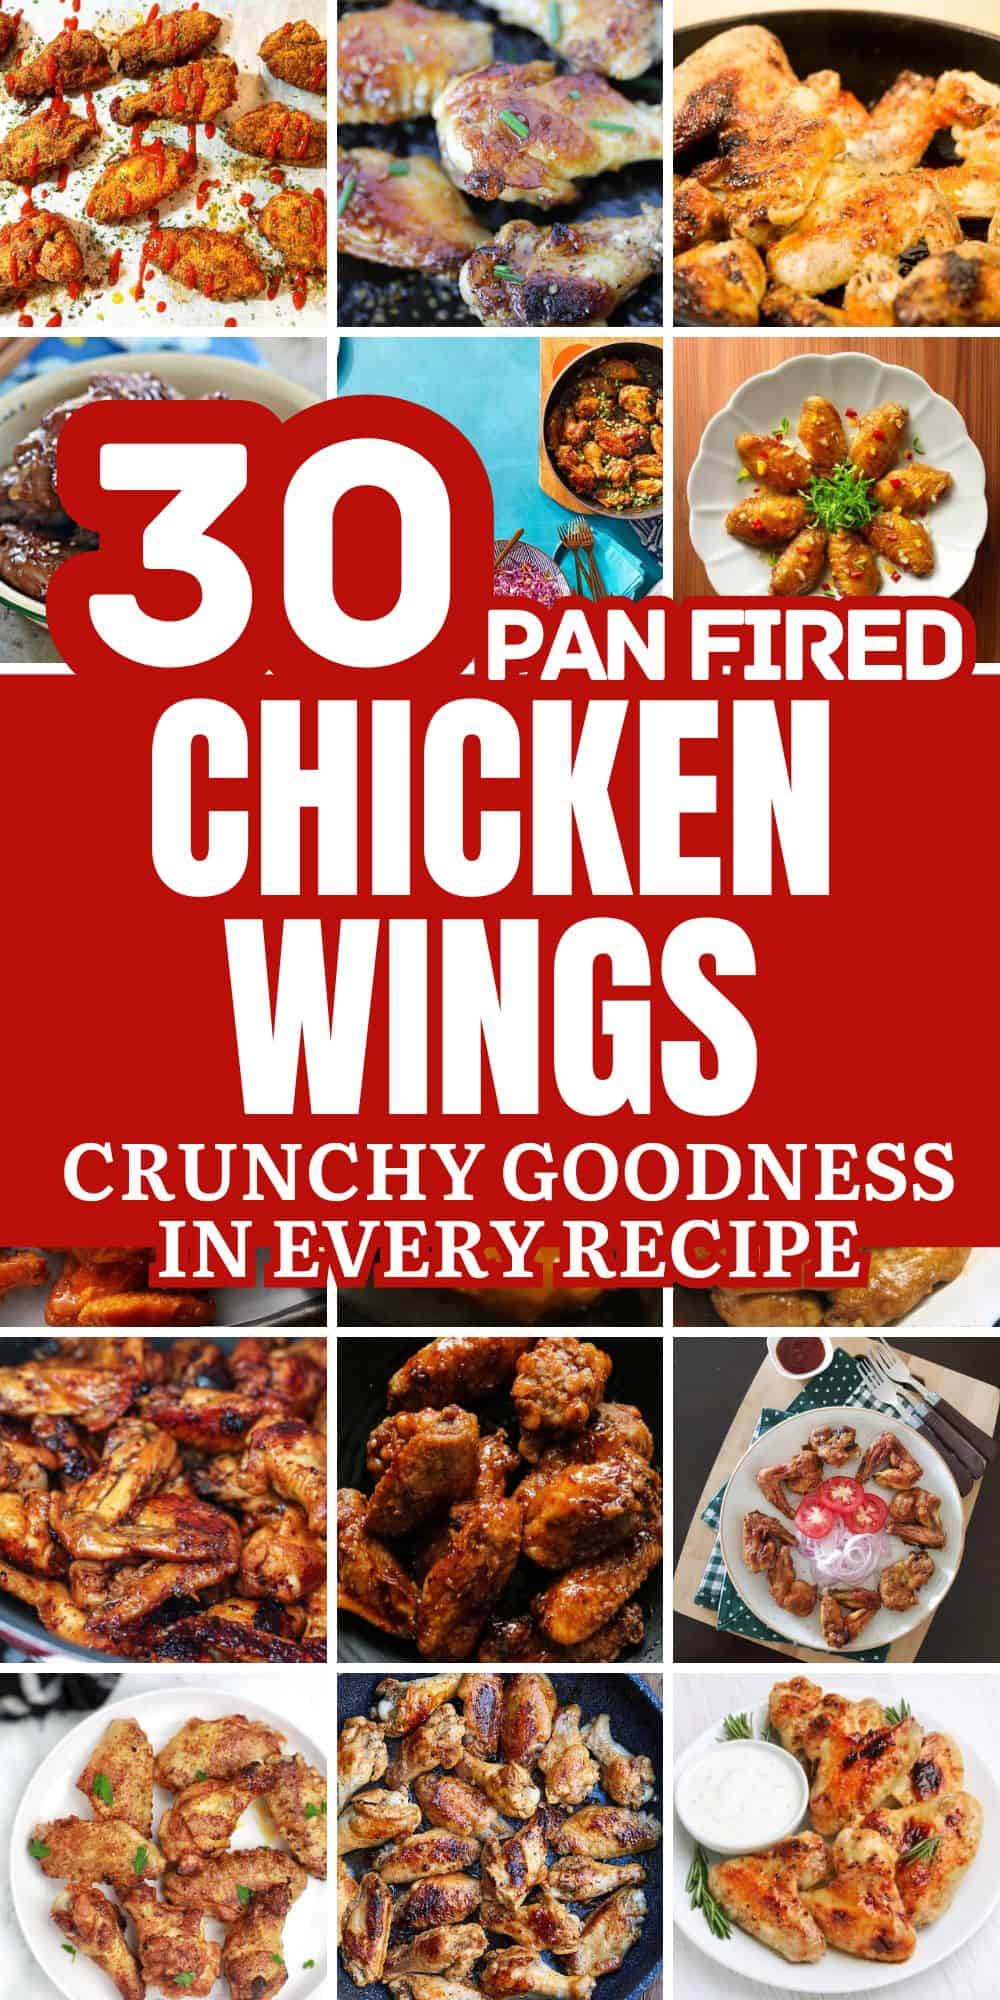 Best Pan Fried Chicken Wings Recipes